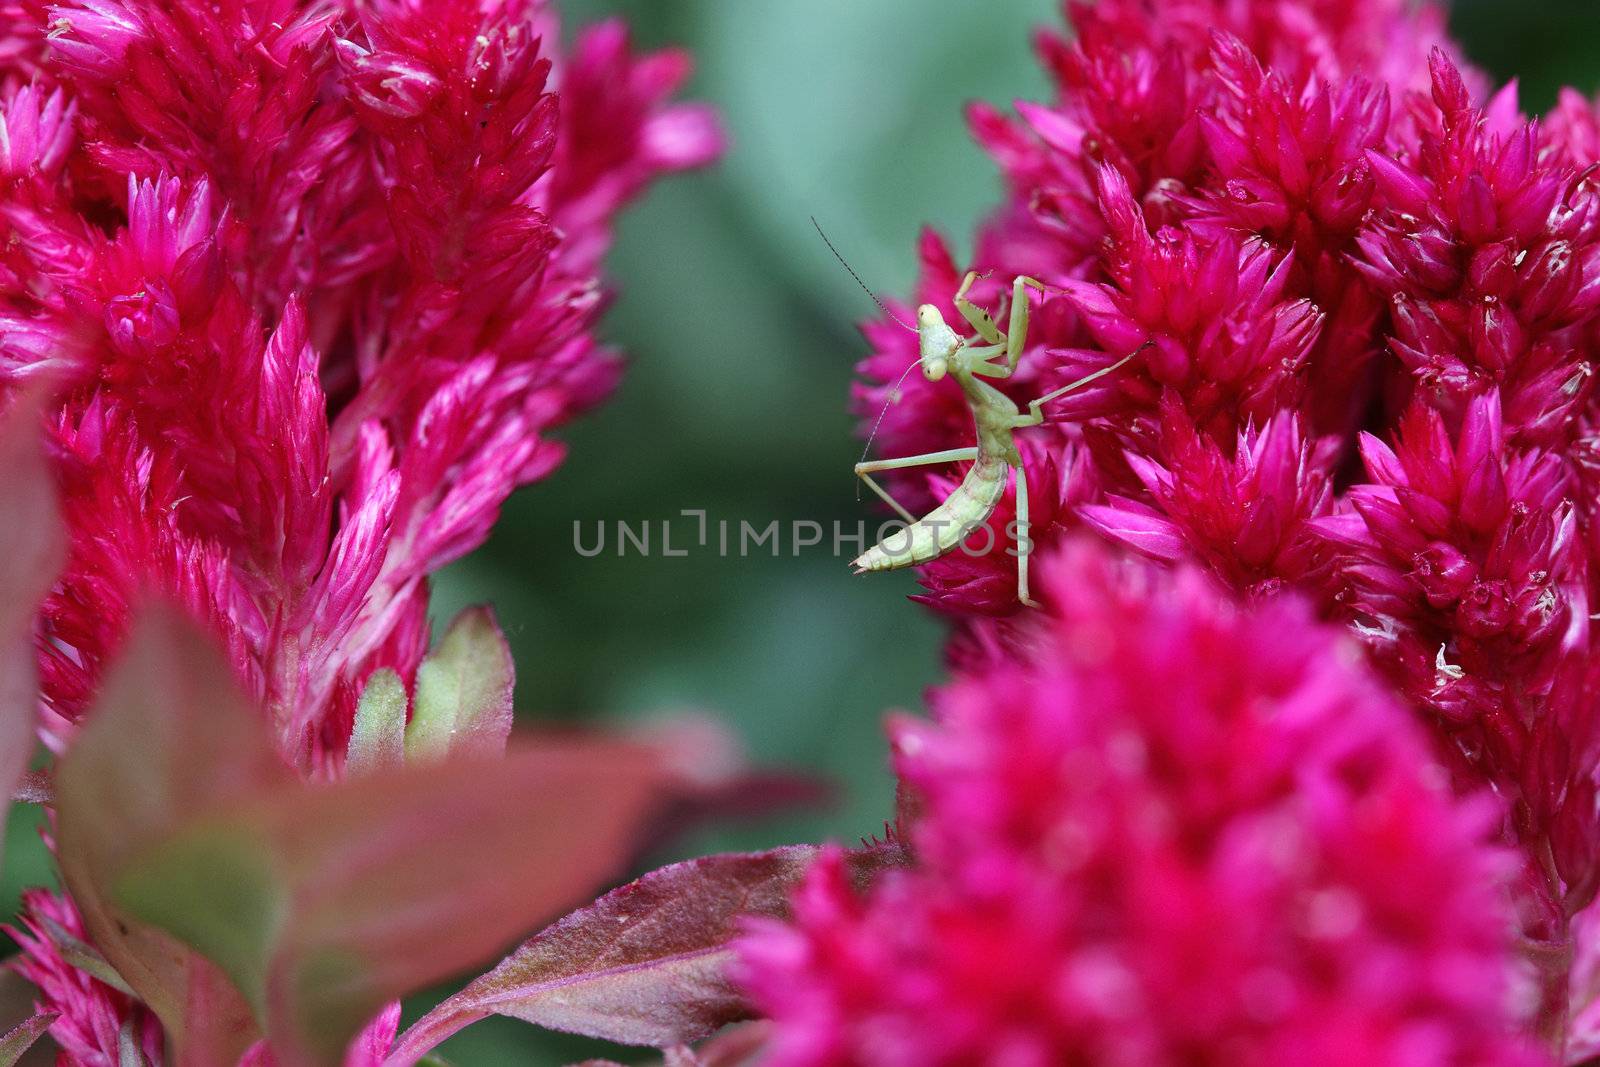 Baby Praying Mantis in a flower garden. 